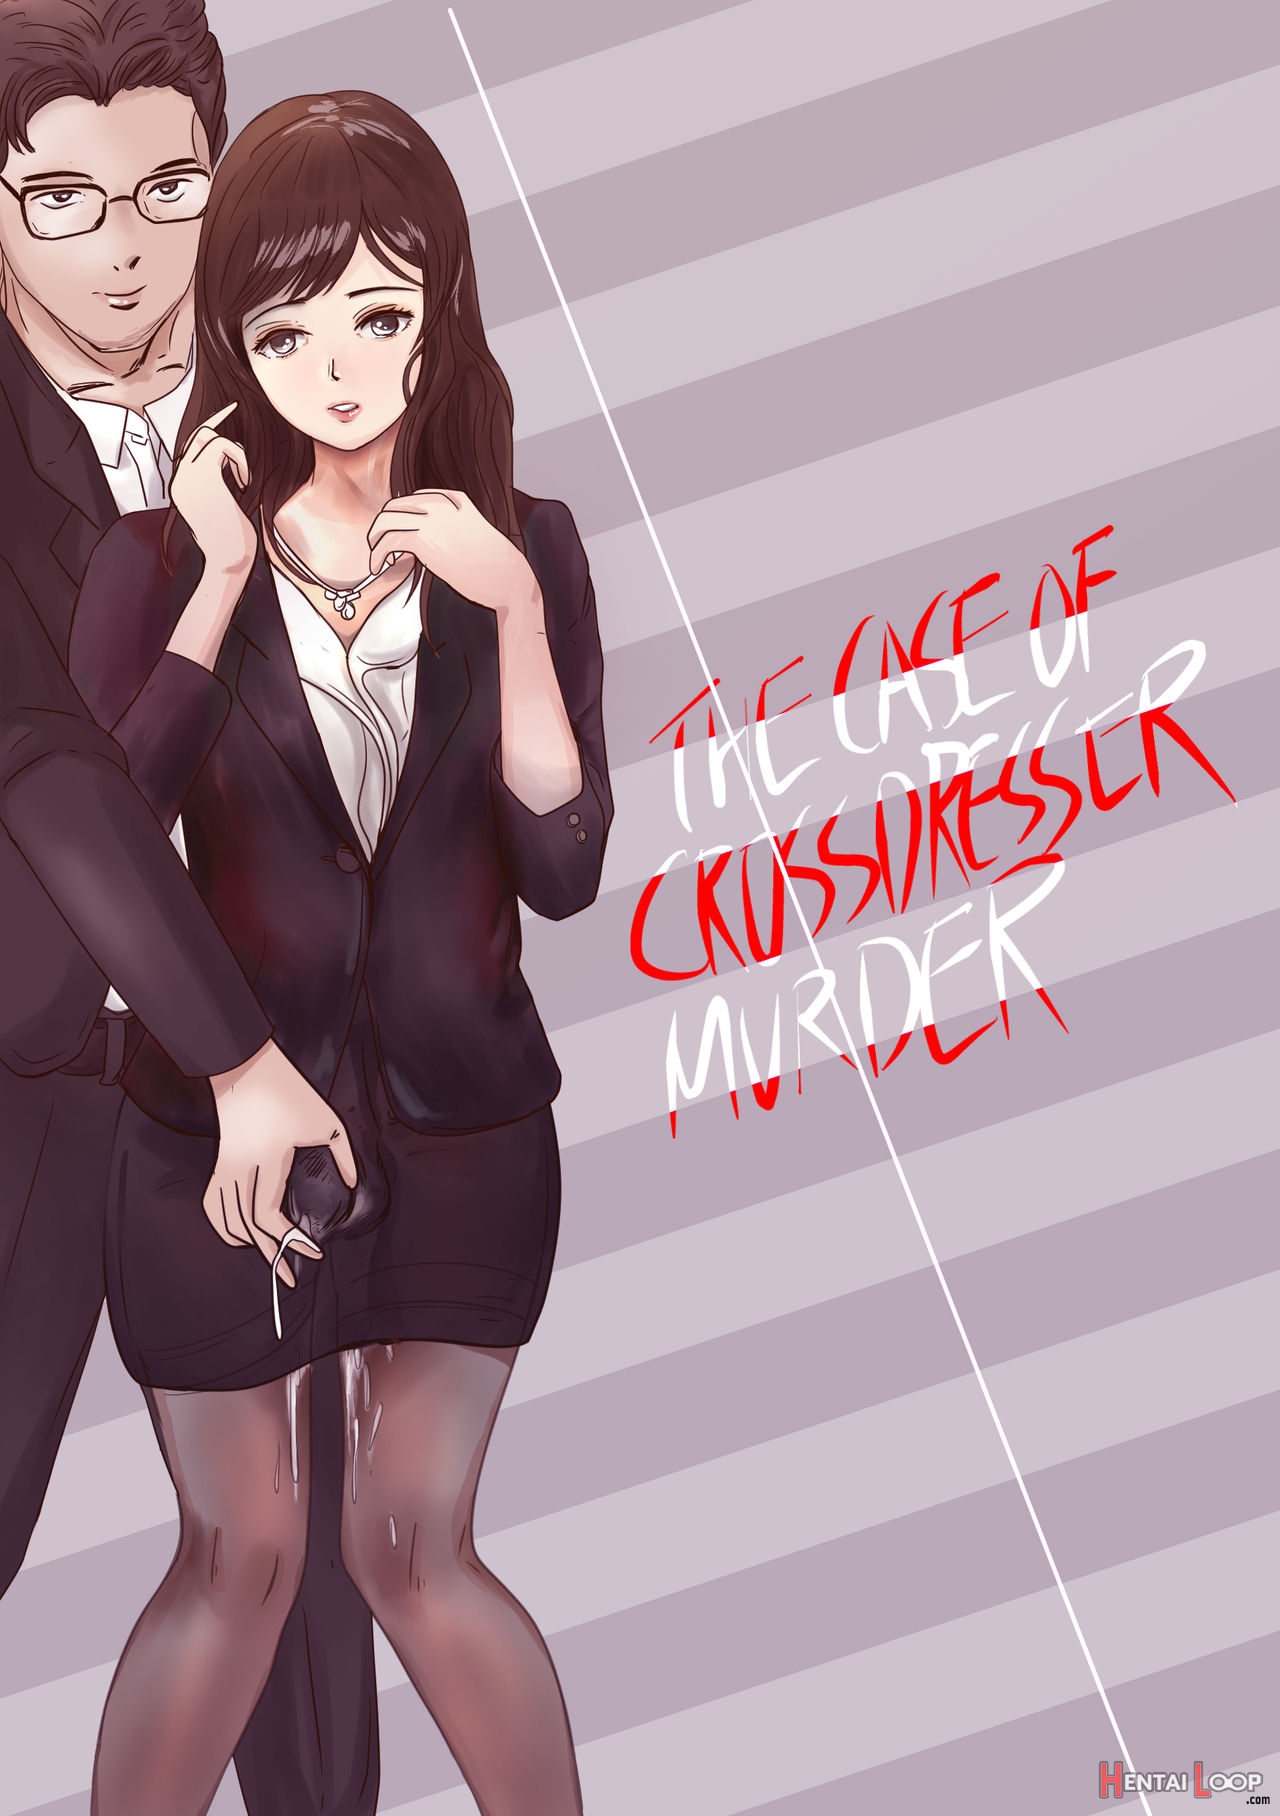 The Case Of Crossdresser Murderi女装男子殺人事件 page 4